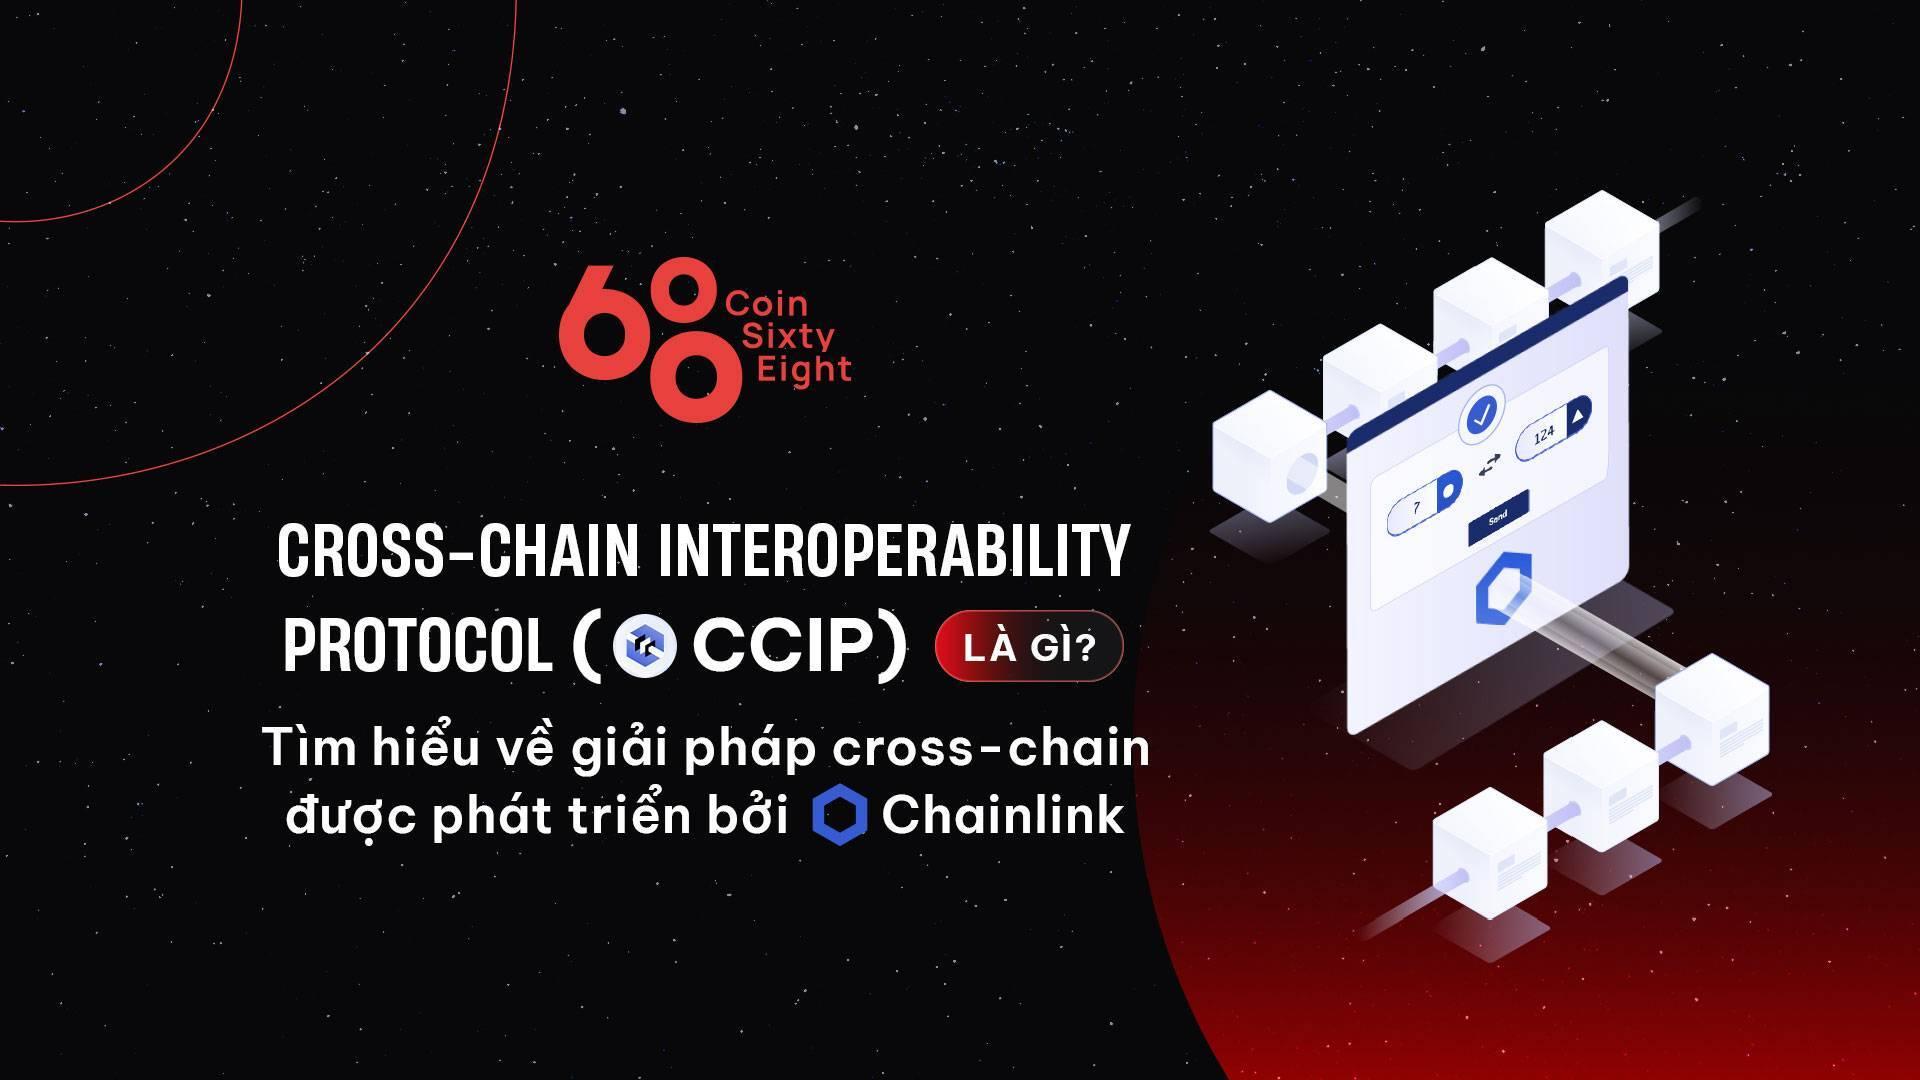 cross-chain-interoperability-protocol-ccip-la-gi-tim-hieu-ve-giai-phap-cross-chain-duoc-phat-trien-boi-chainlink